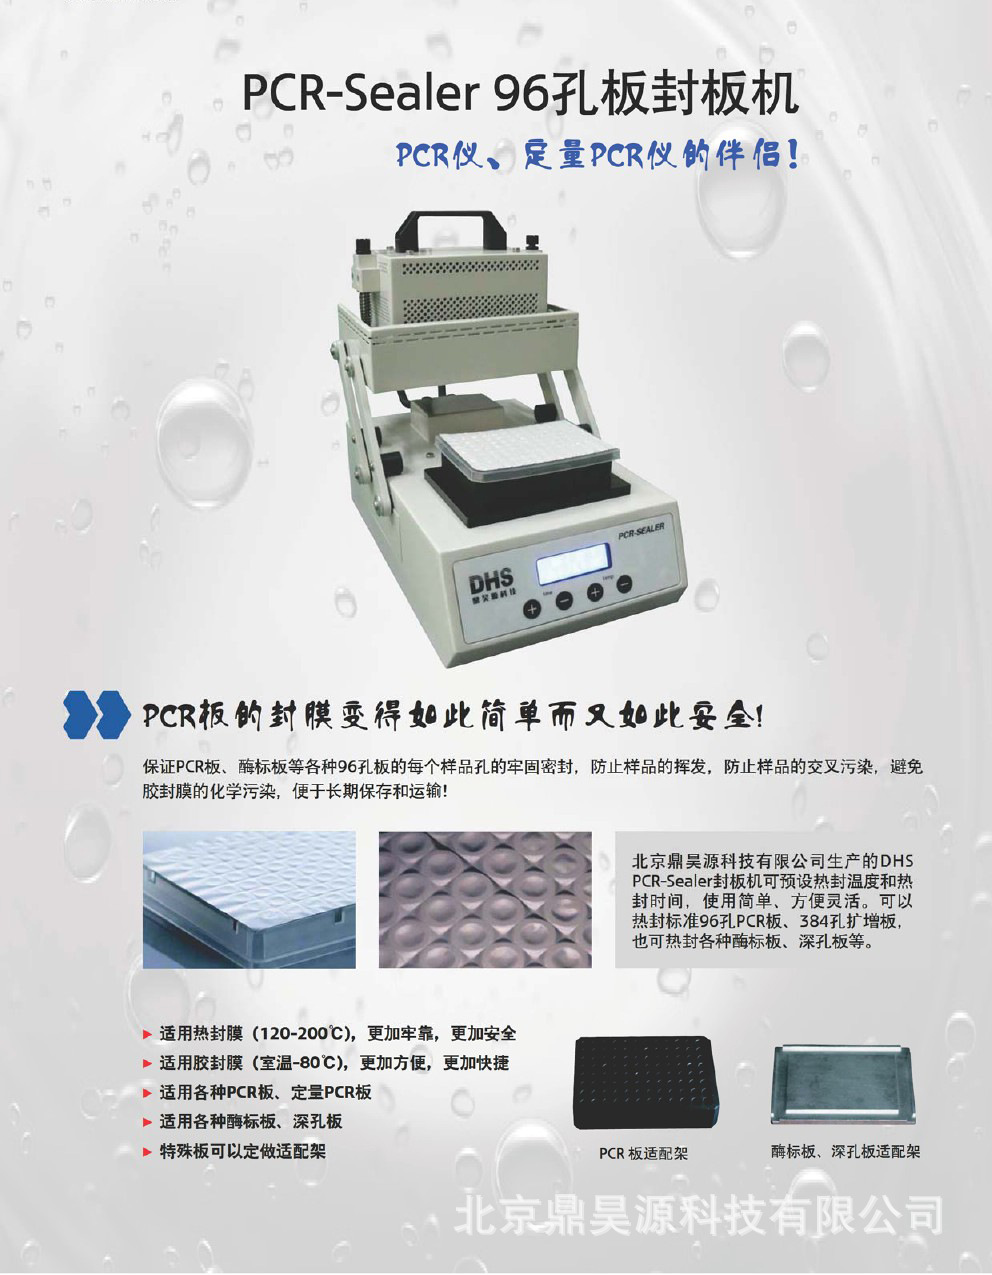 PCR-Sealer 96孔板封板机产品介绍1